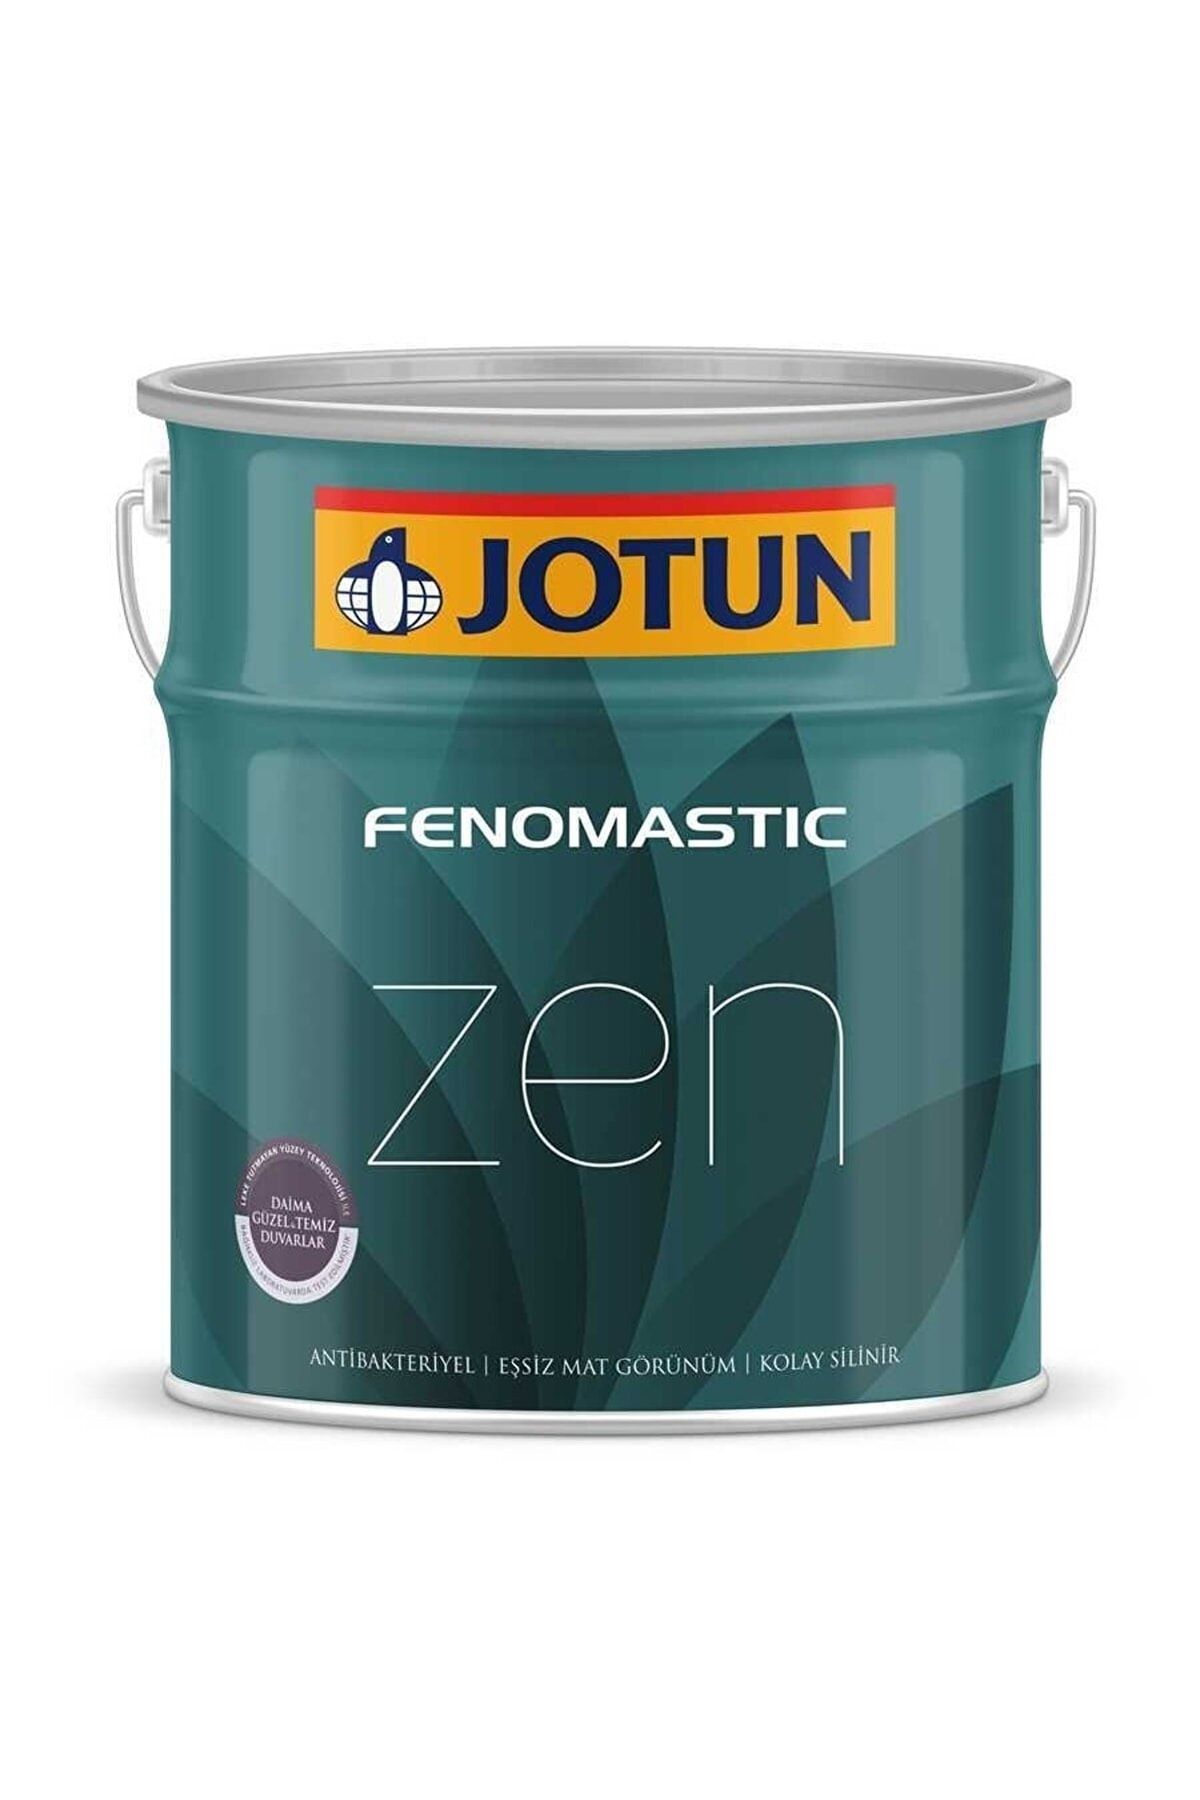 Jotun Fenomastic Zen 13.5 Lt Soya Milk 1105